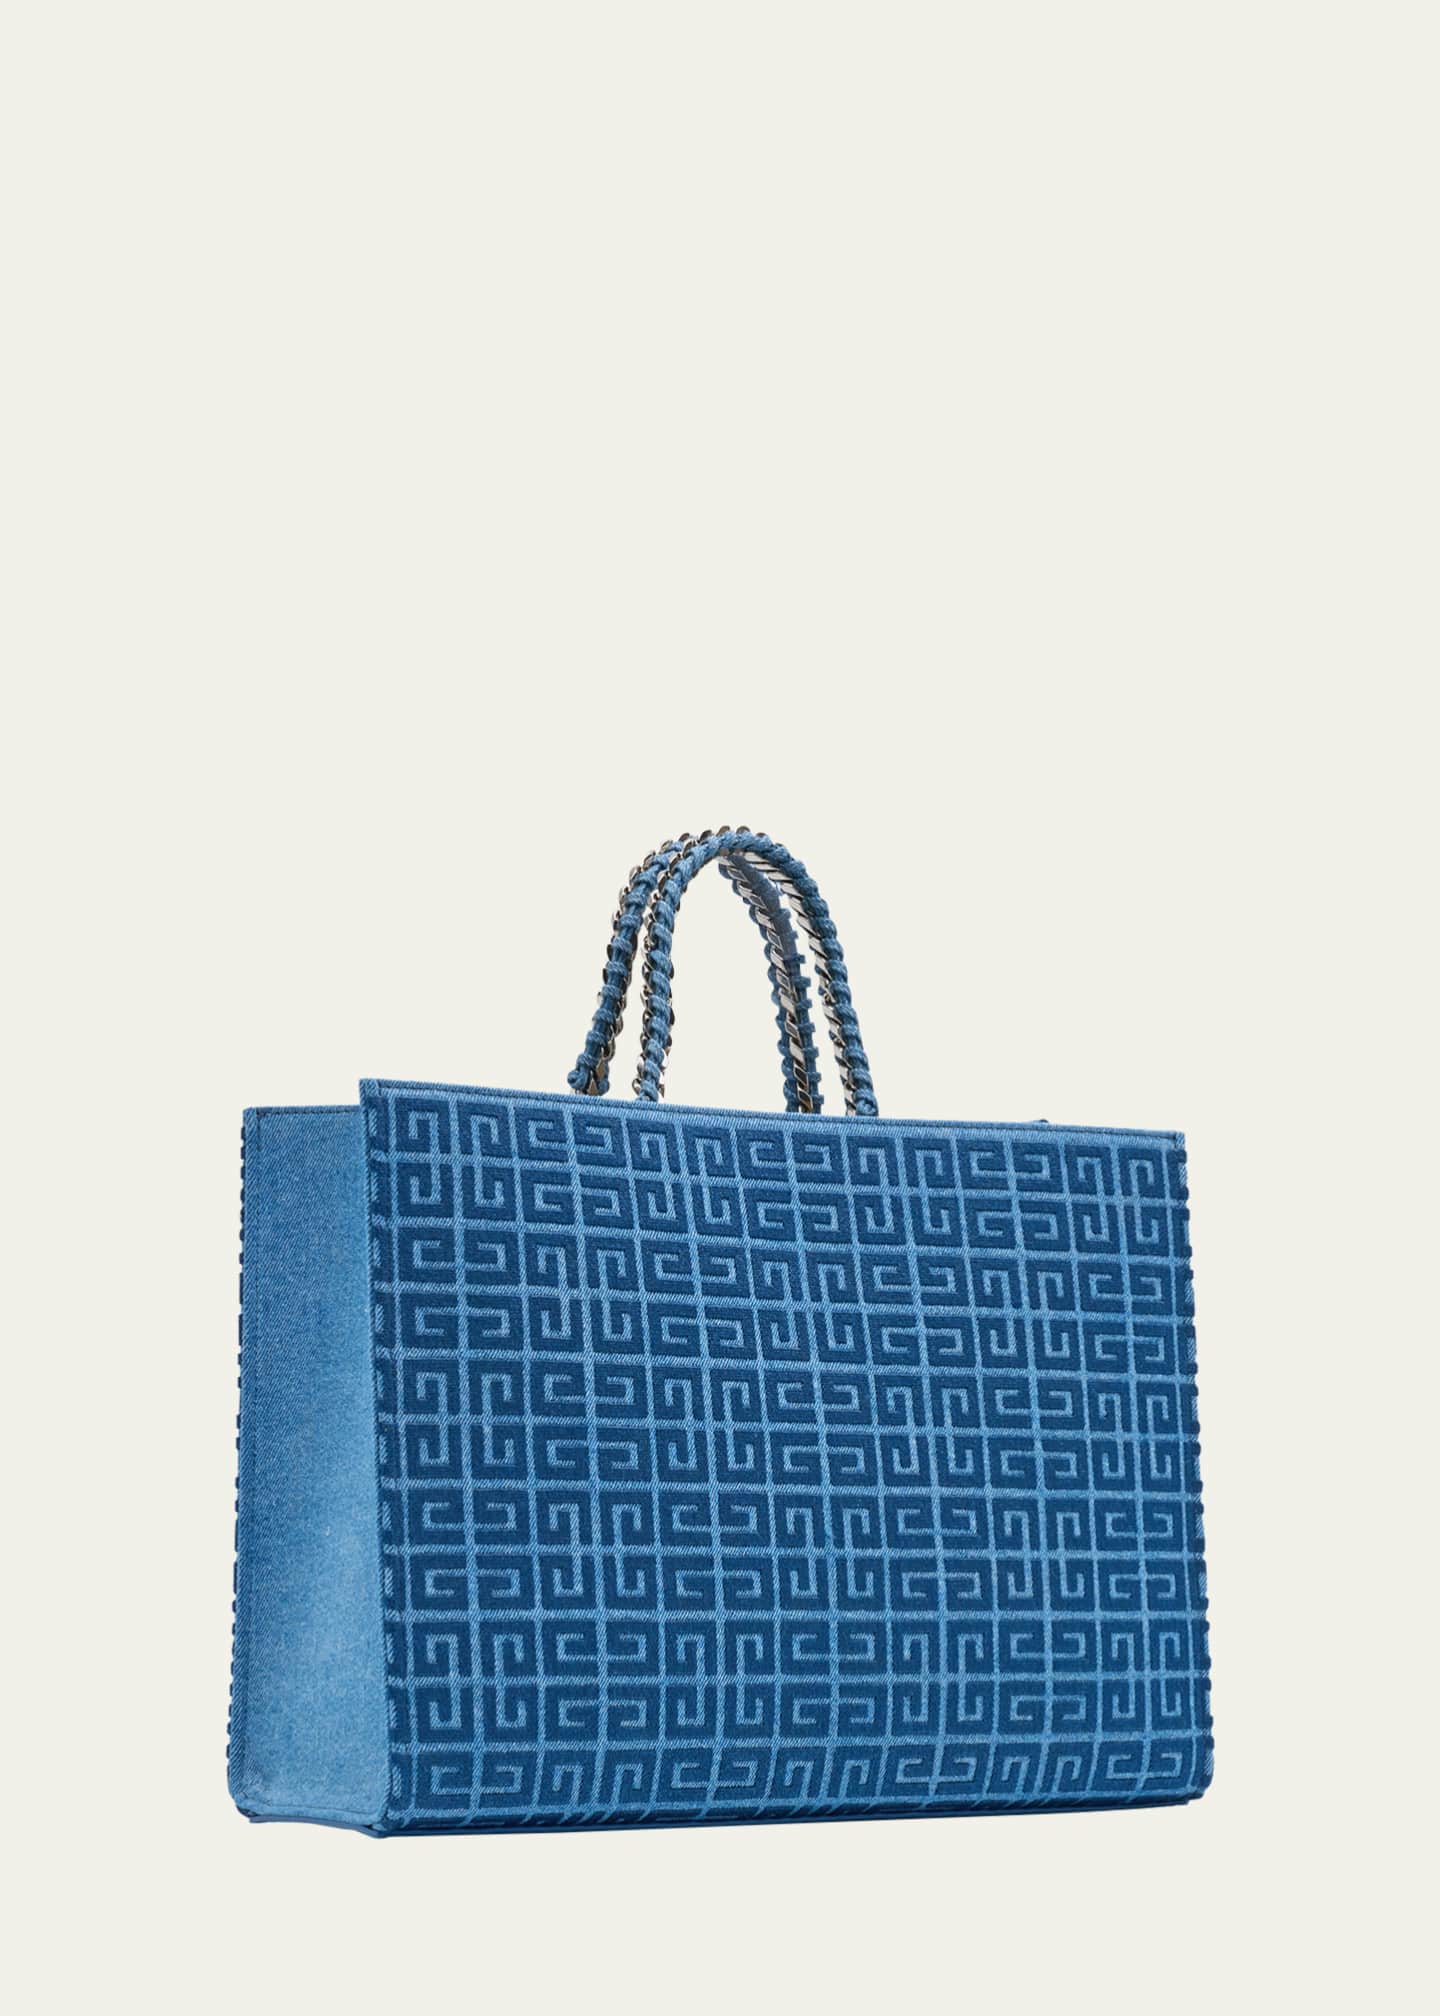 Furla Women's 'Opportunity Medium' Shopper Bag - Blue - Totes